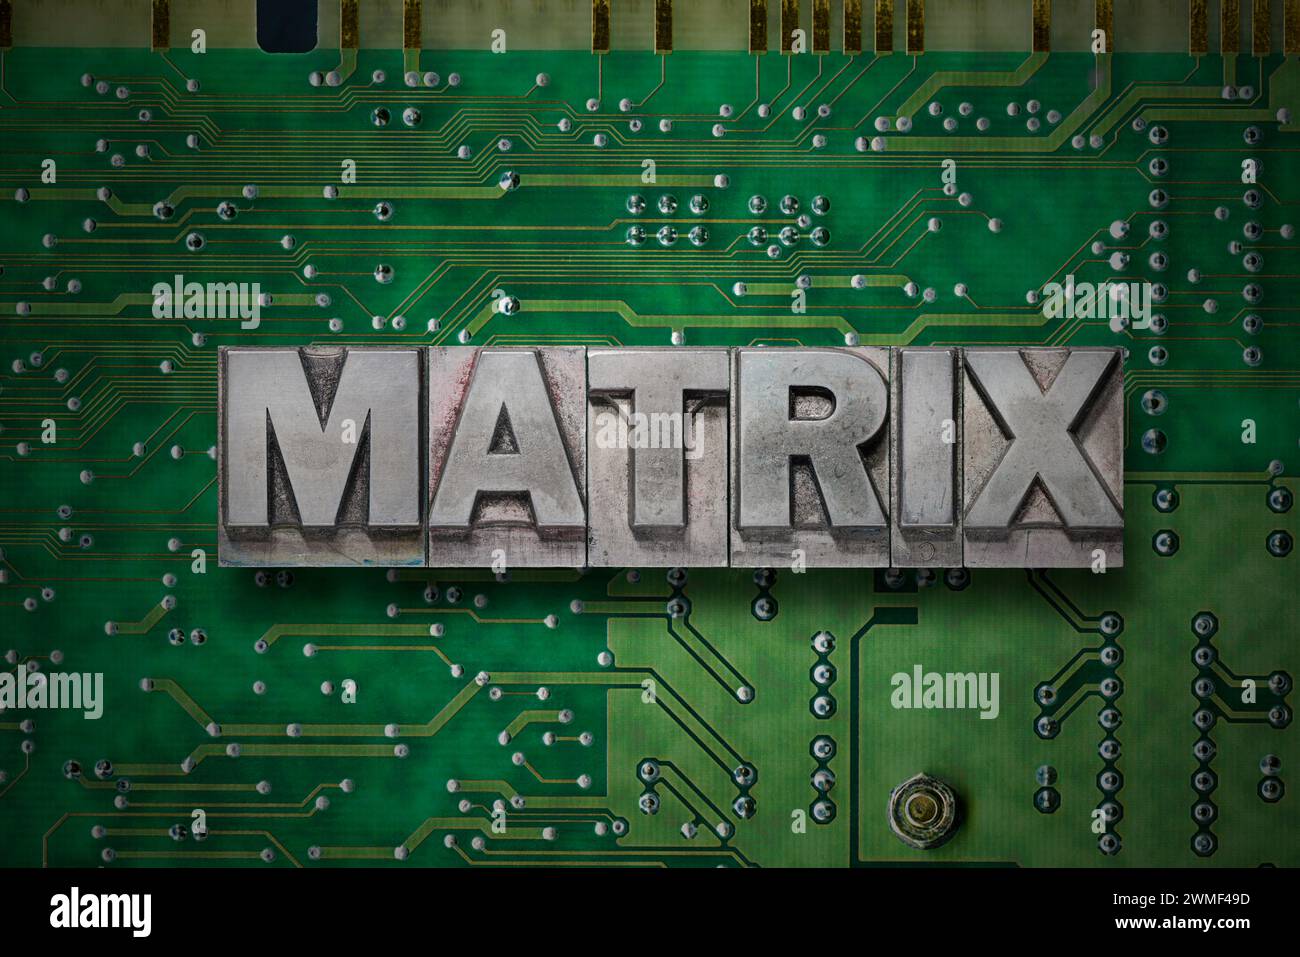 matrix word made from metallic letterpress blocks on the green pc board background Stock Photo